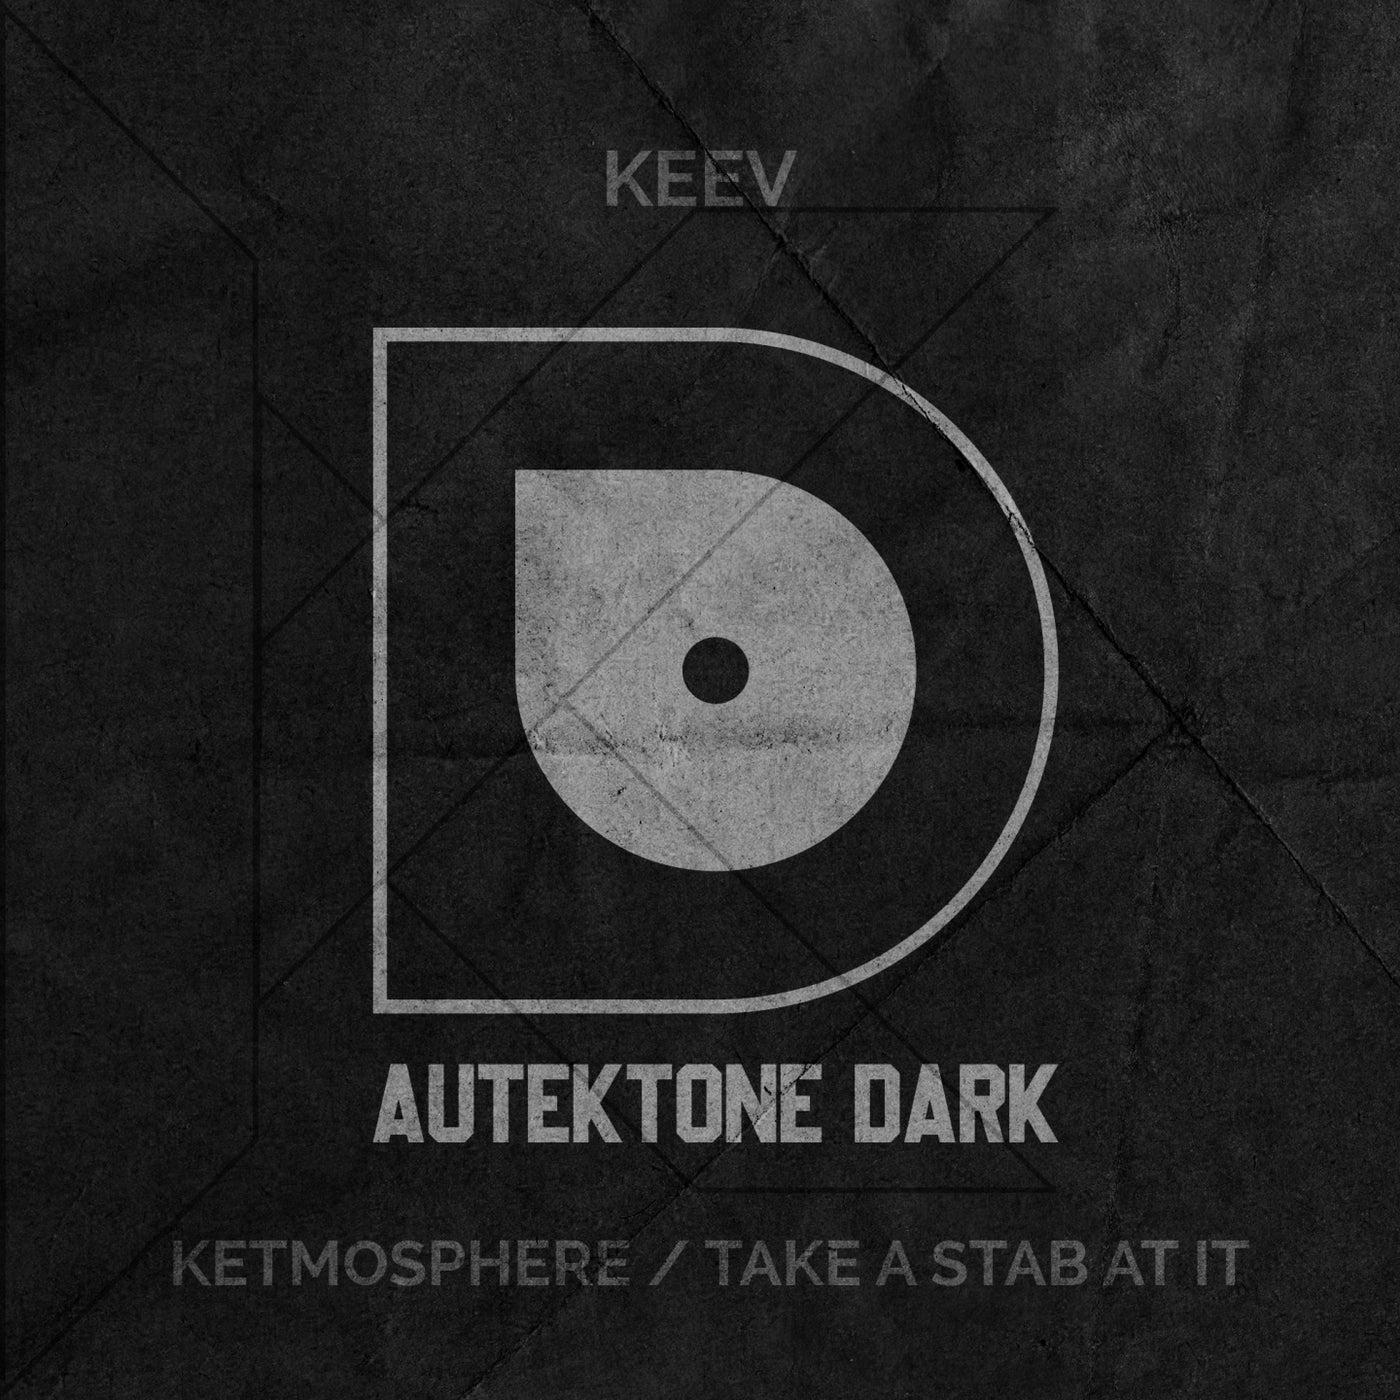 Ketmosphere / Take A Stab At It